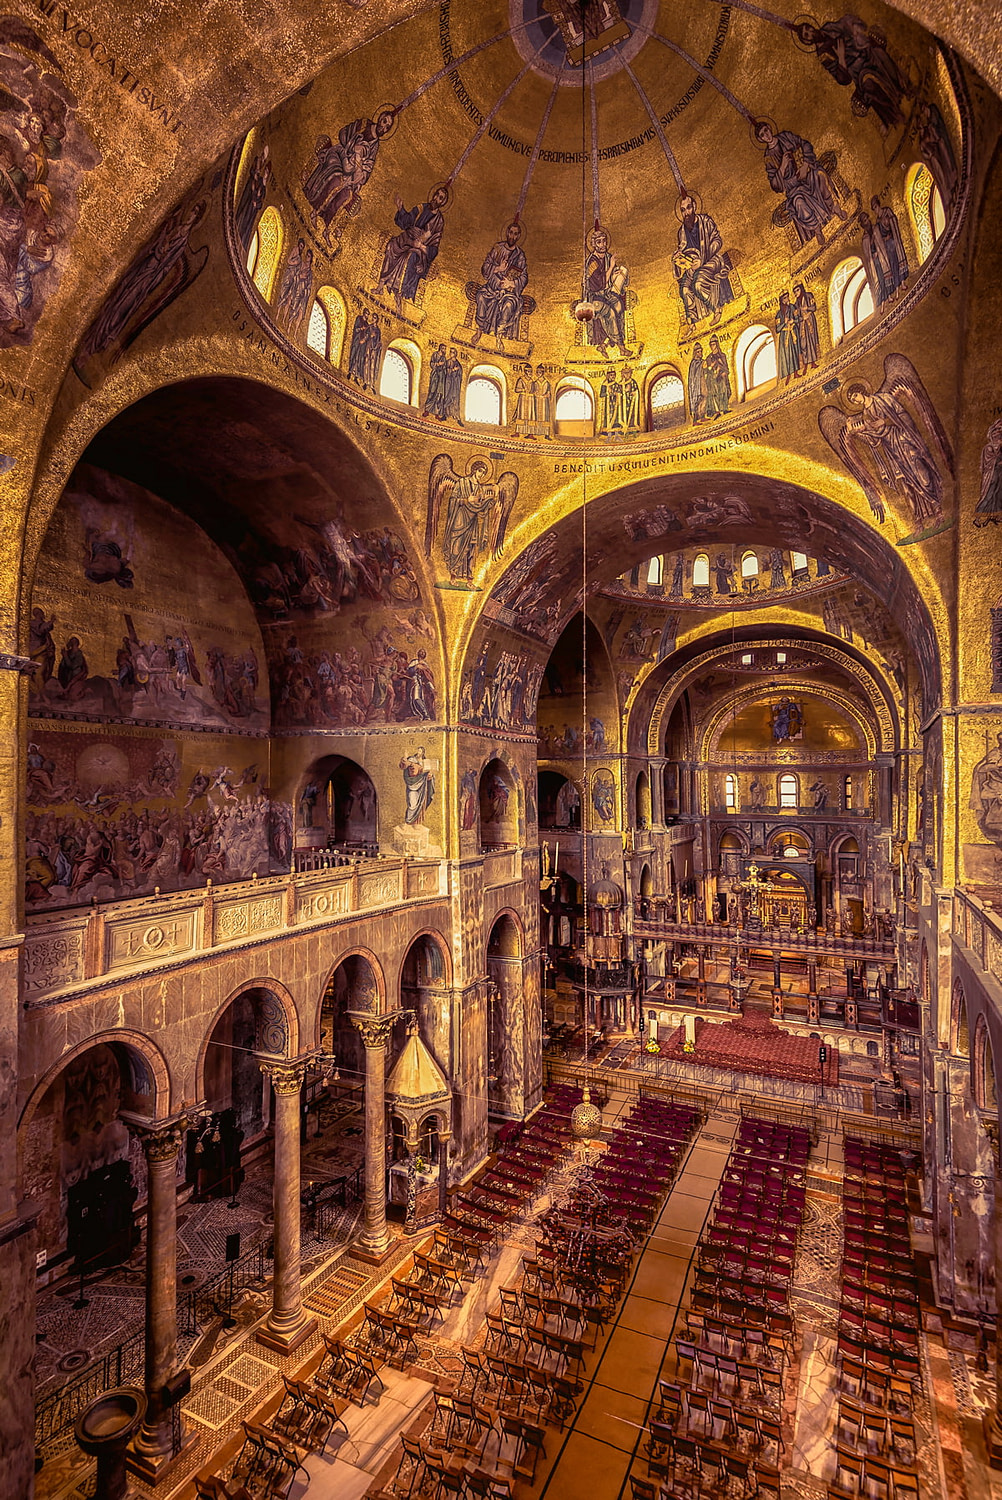 St Mark's Basilica Interiors